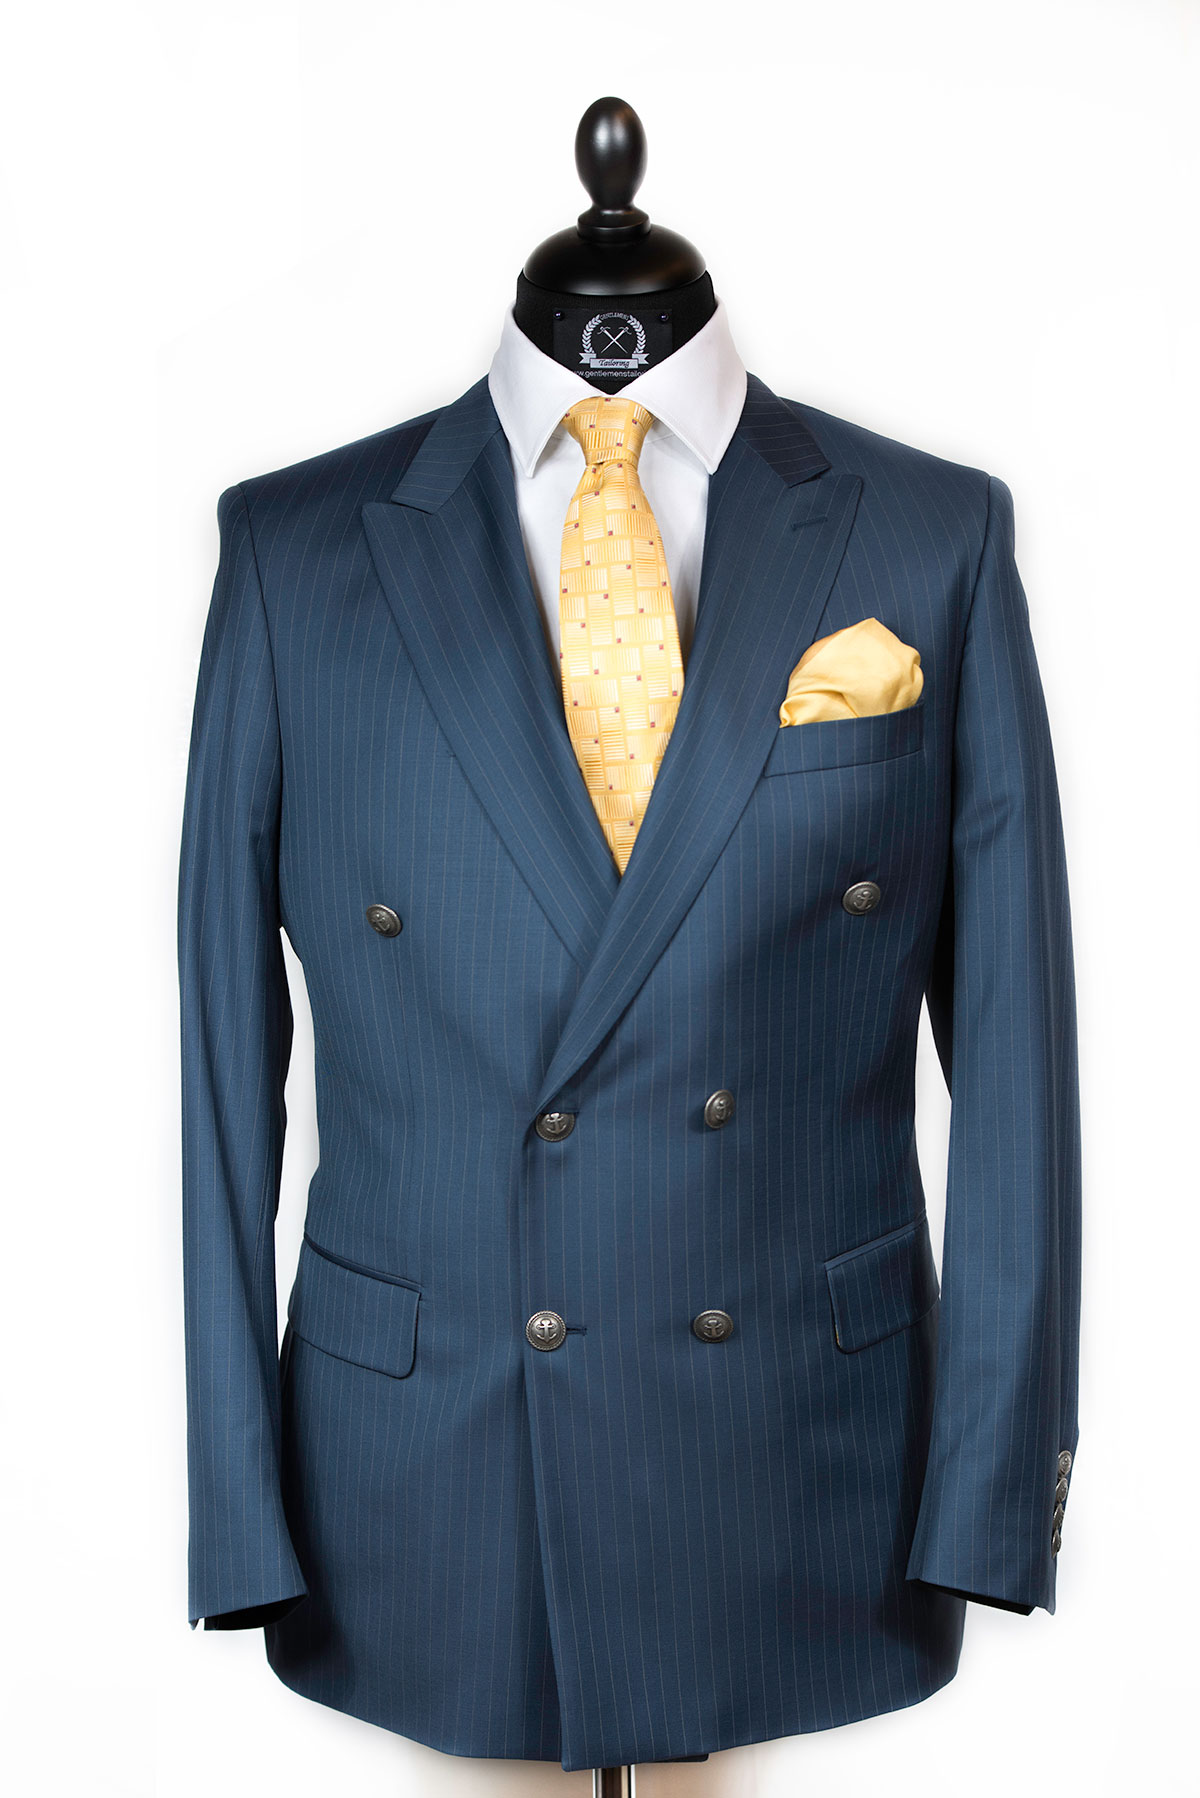 costum-made-to-measure-5 - Gentlemens tailoring